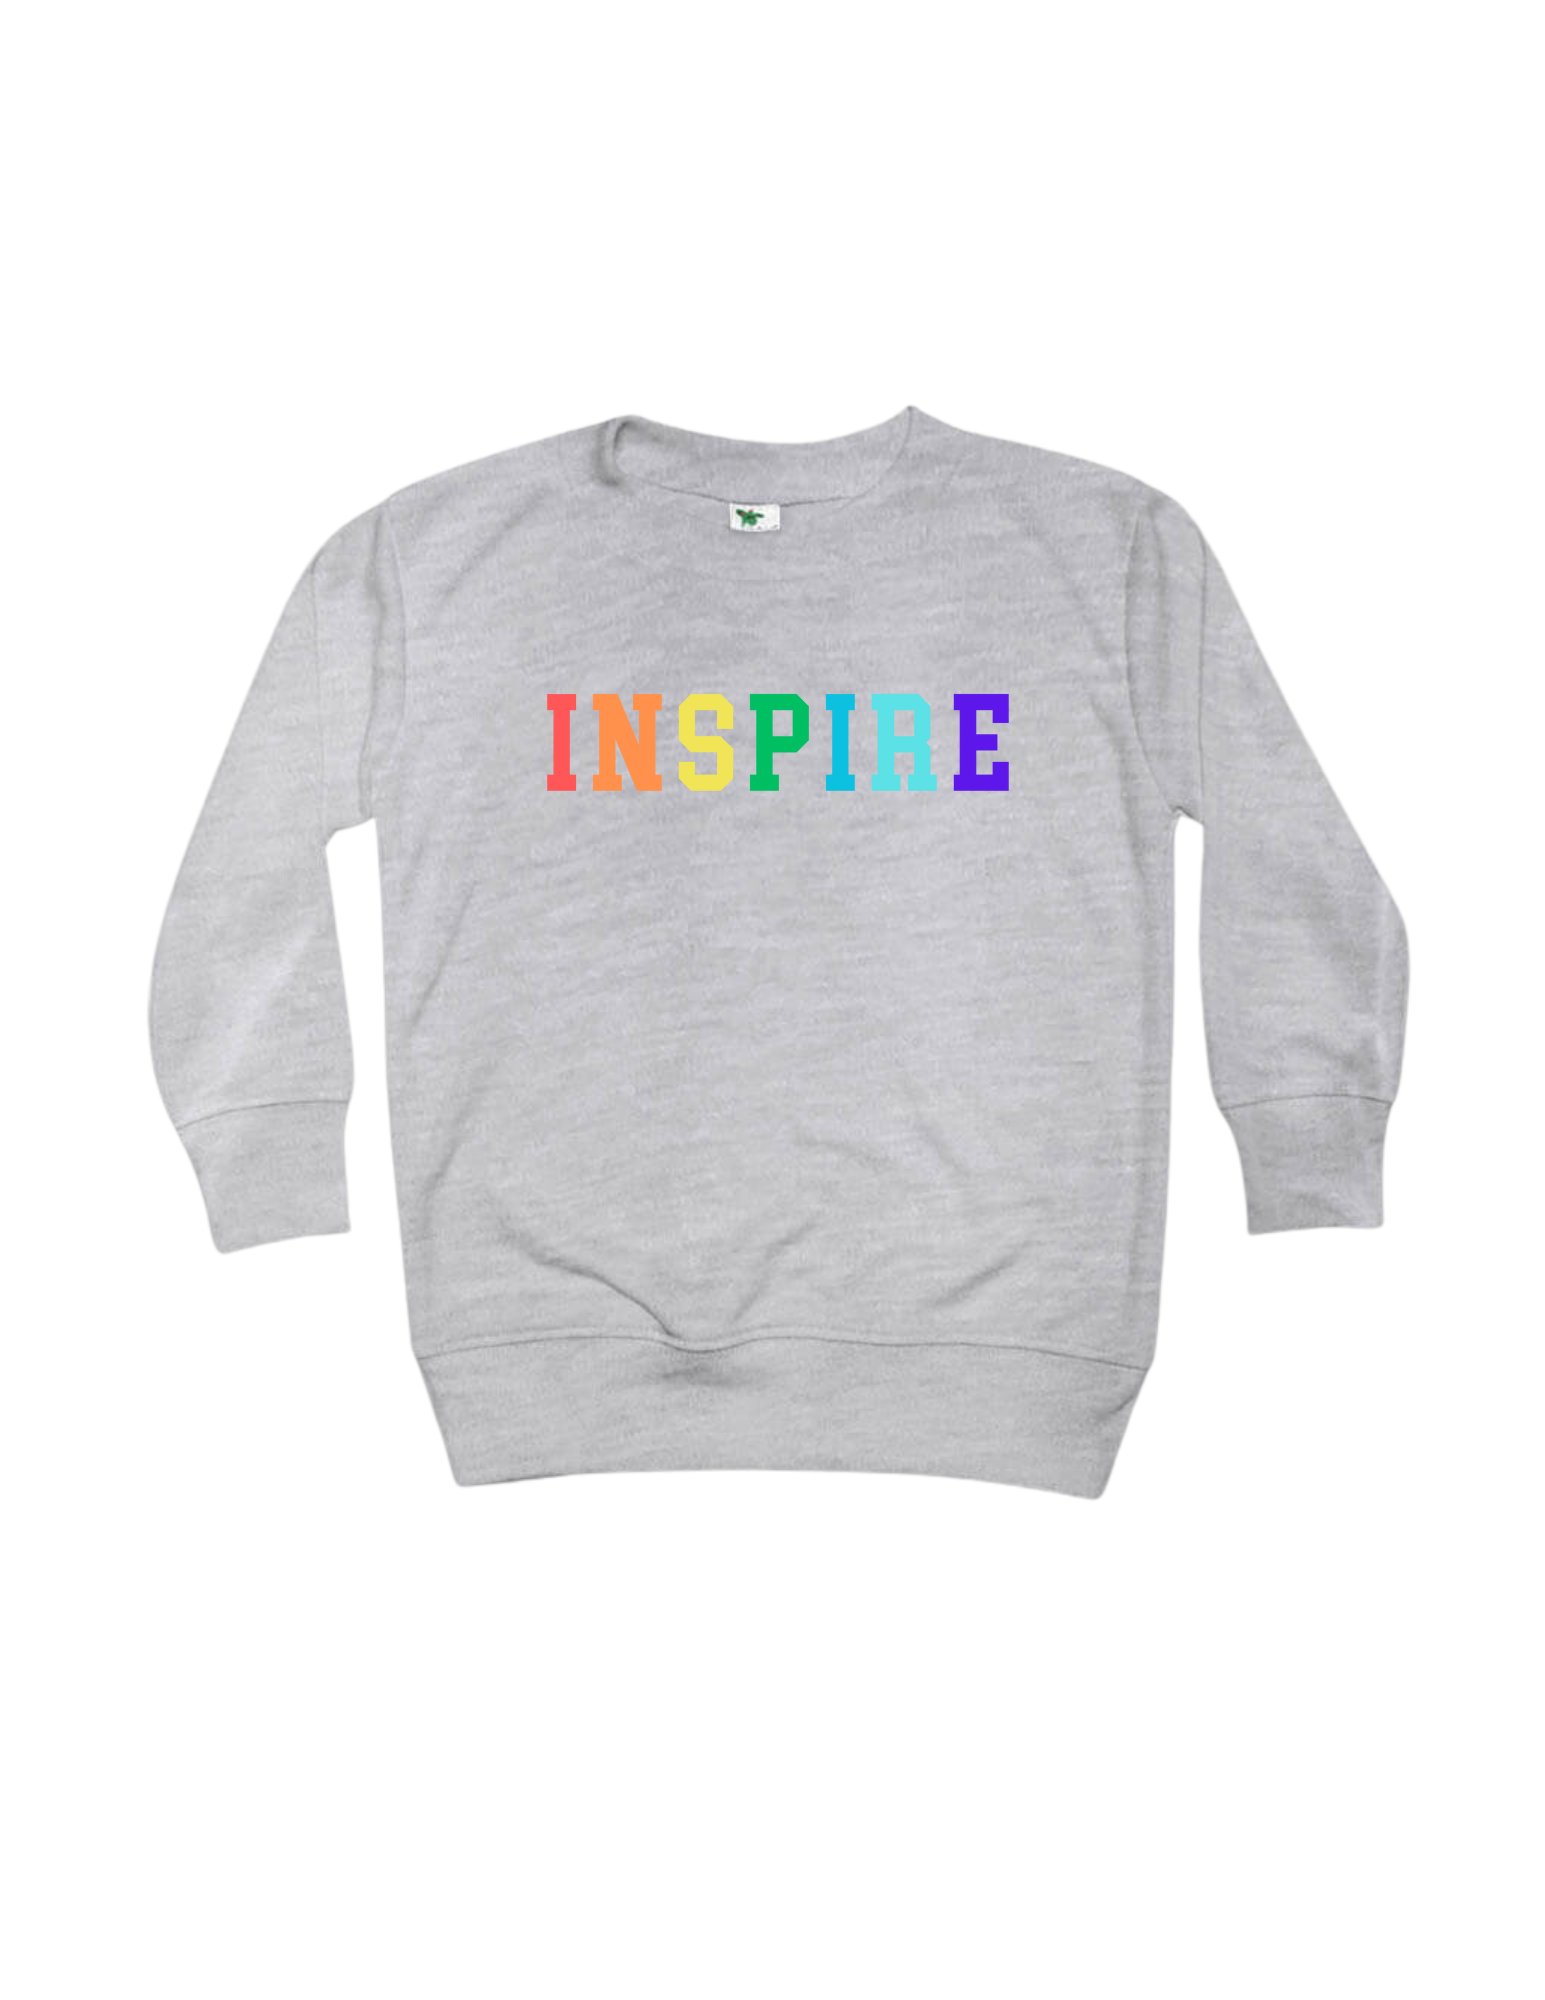 Inspire Lightweight Colorful Sweatshirt - Aspen Lane 